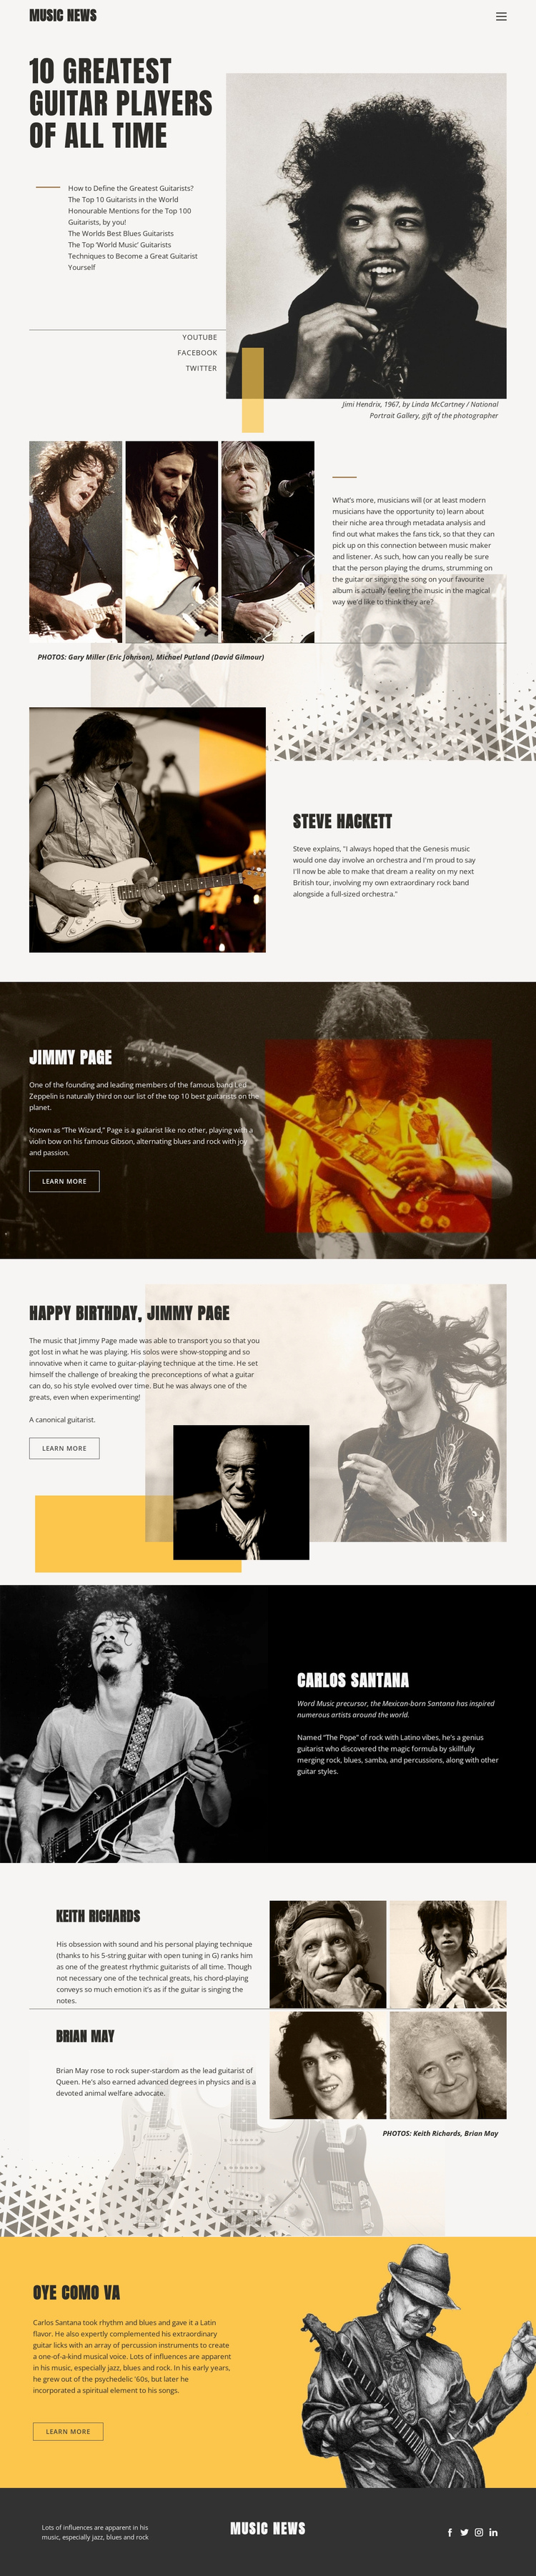 The Top Guitar Players Website Builder Software